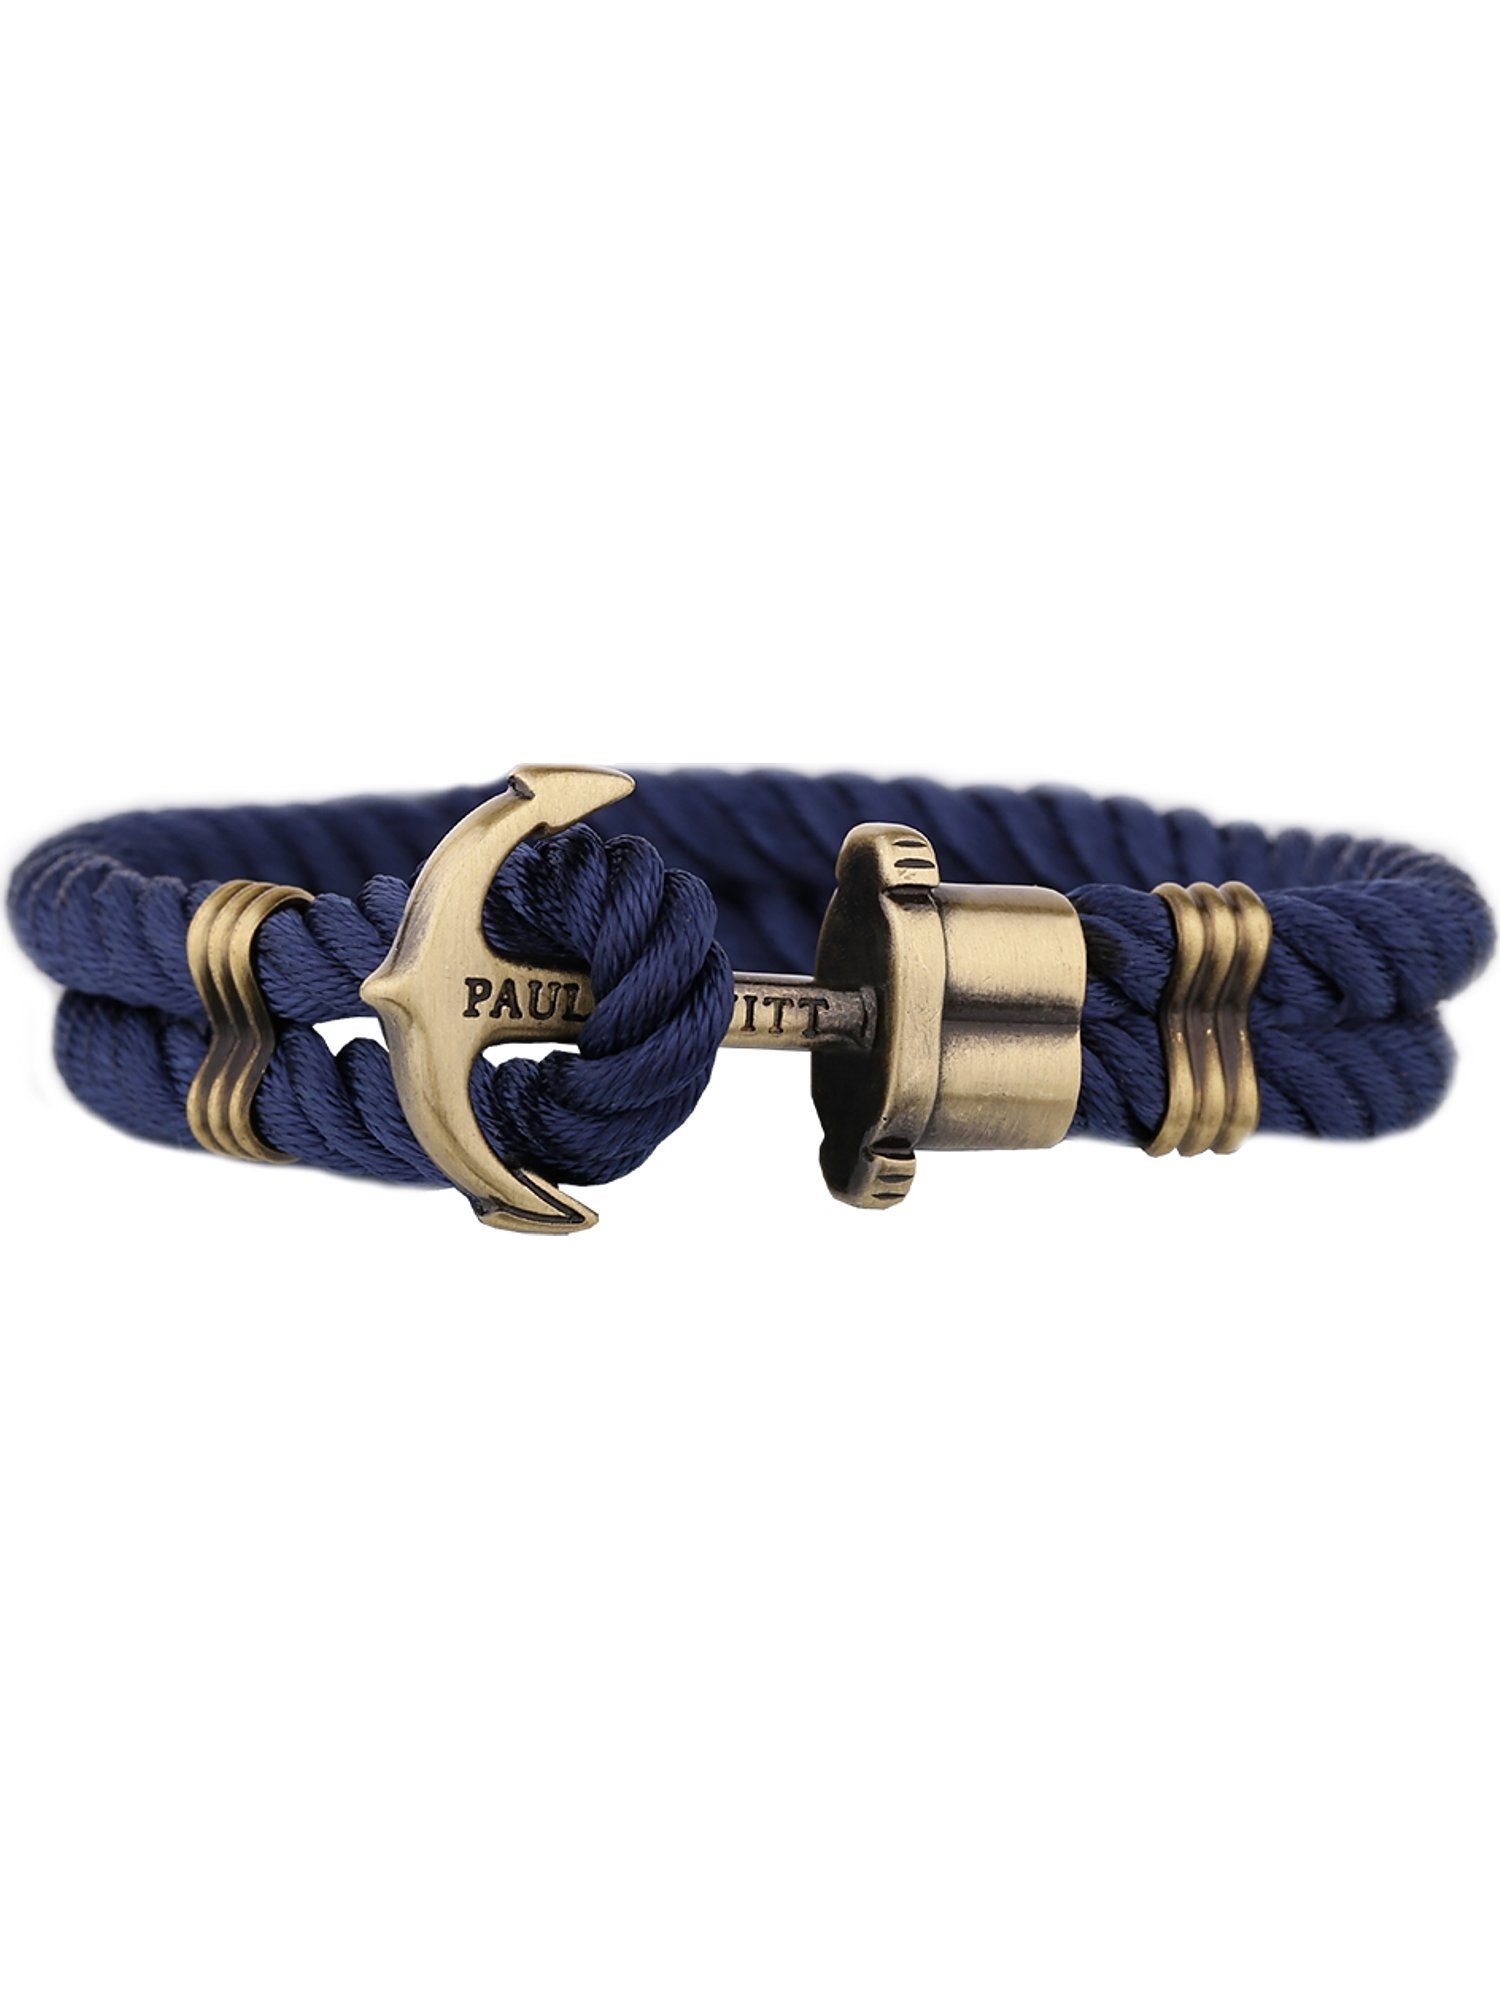 PAUL HEWITT Armband Paul Hewitt Unisex-Armband Perlon/Nylon, Messing, trendig blau